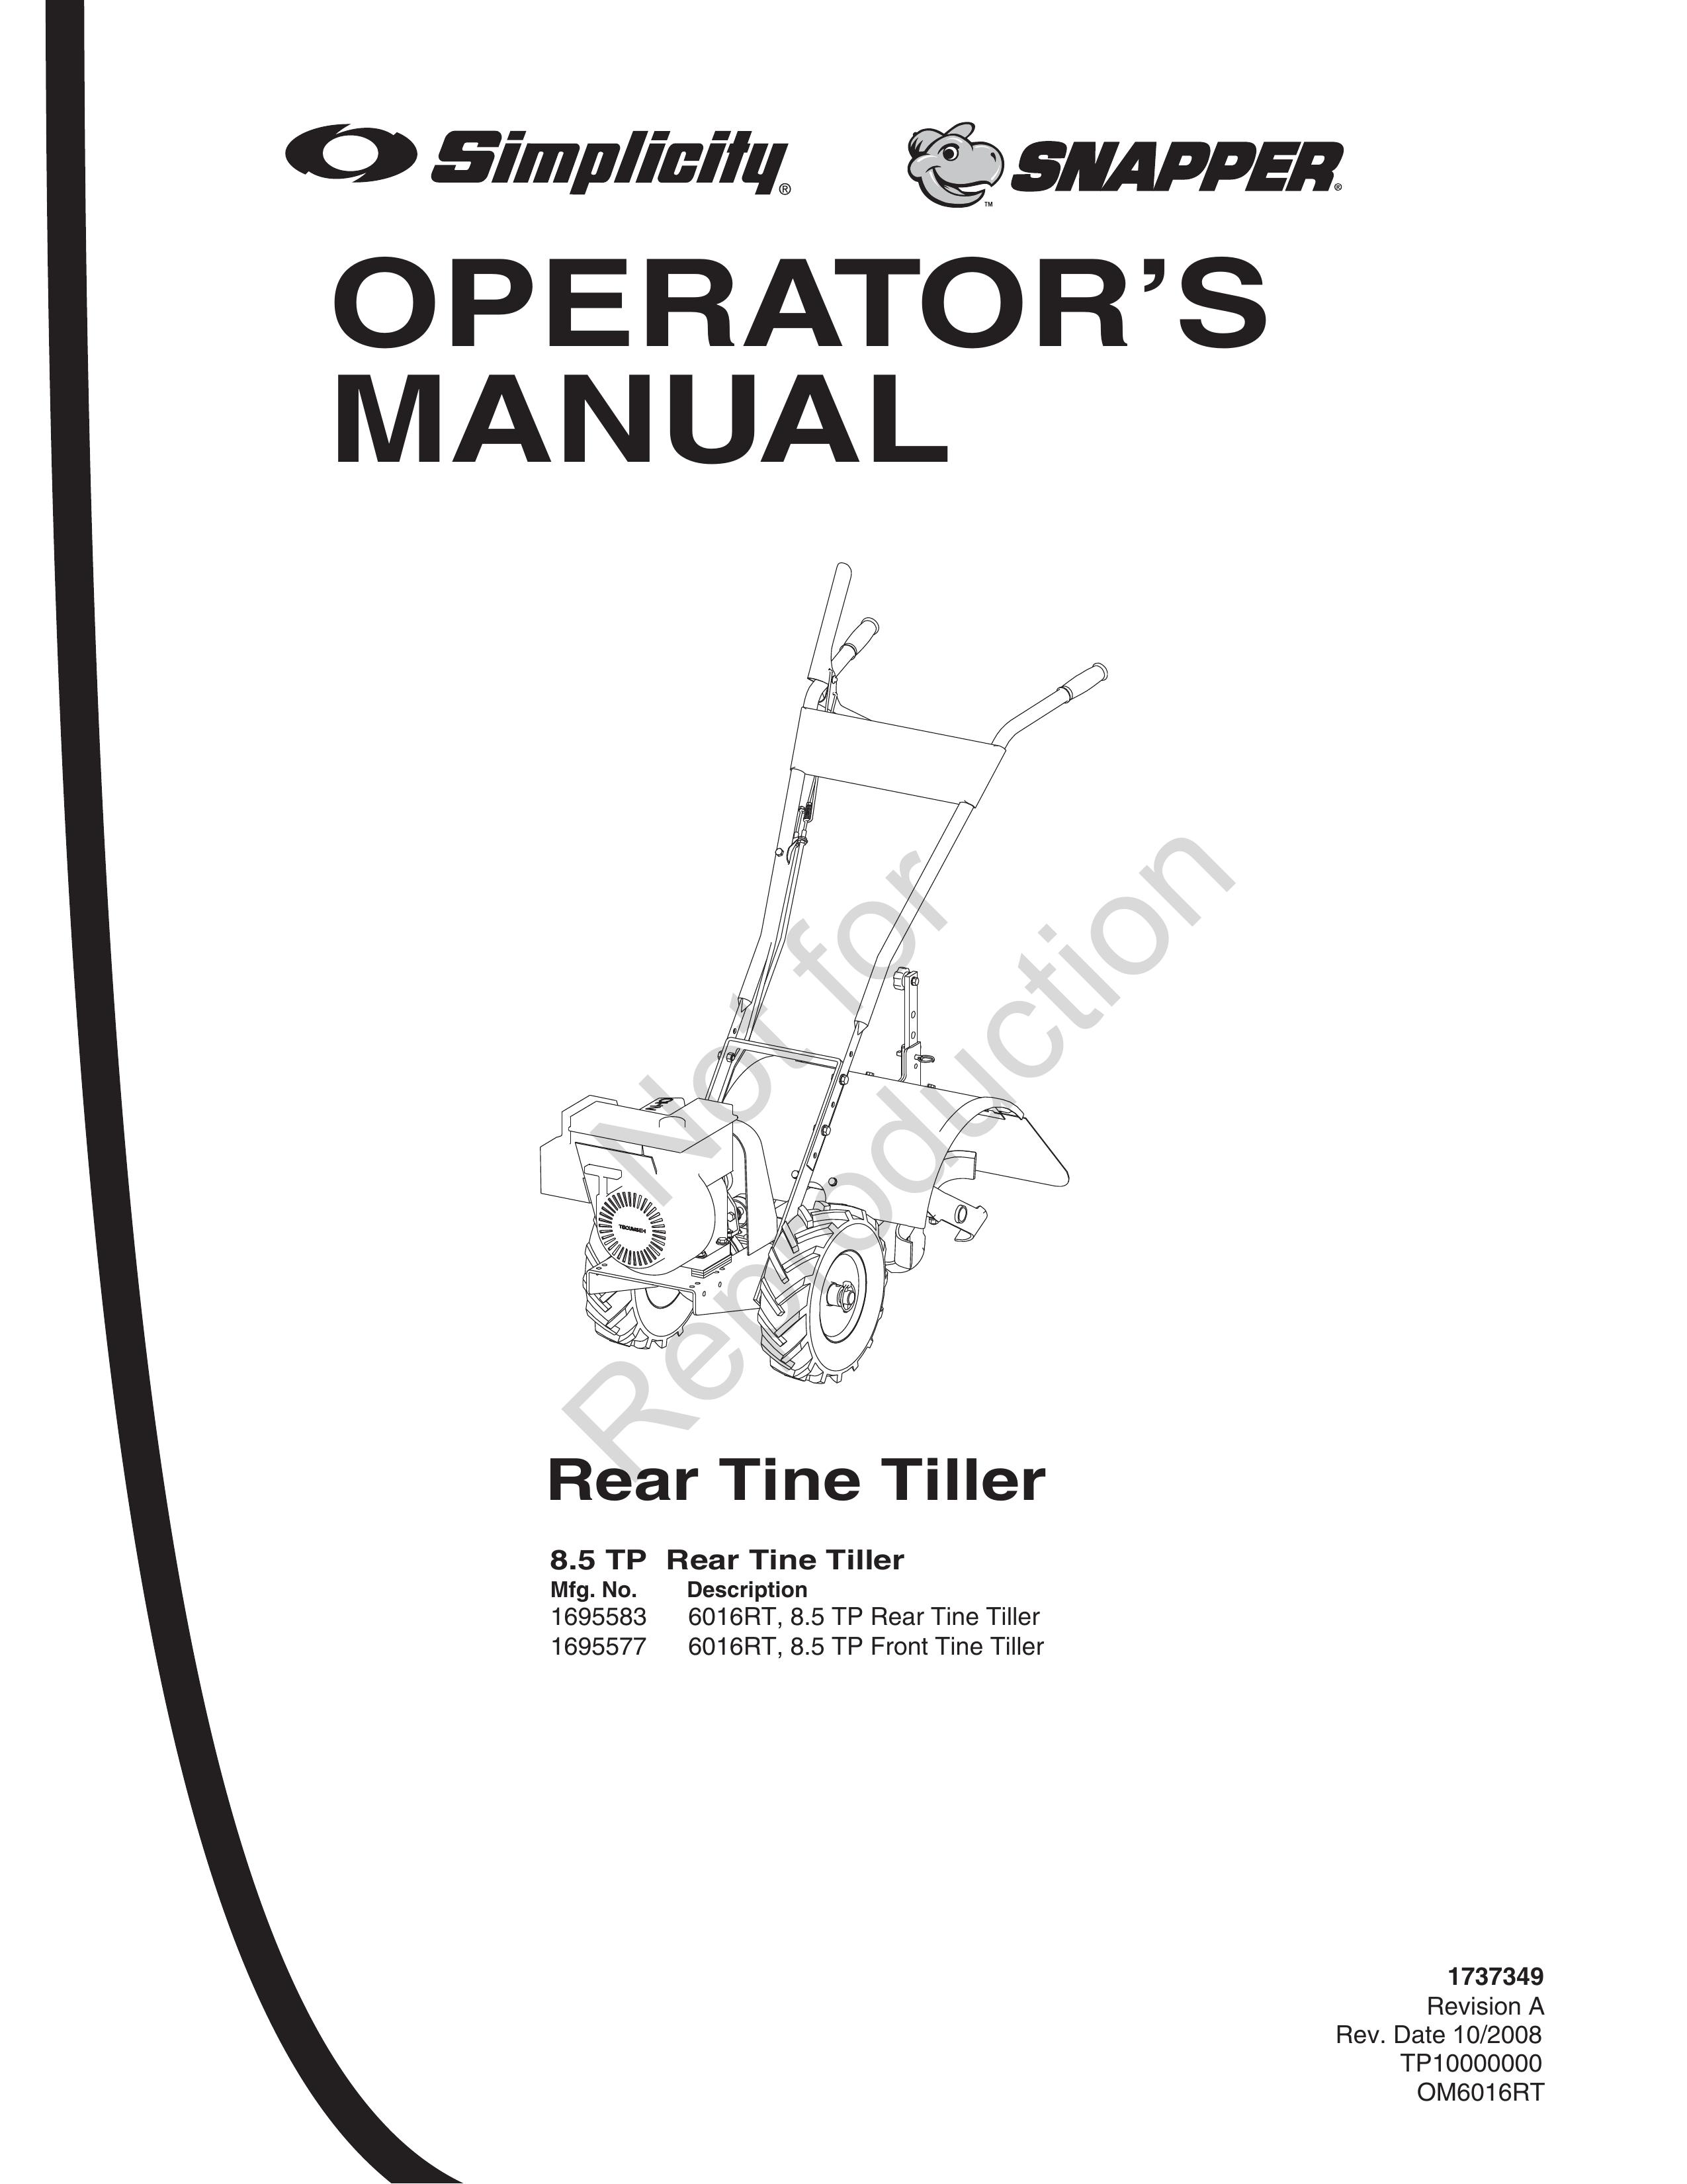 Snapper 8.5 TP Tiller User Manual